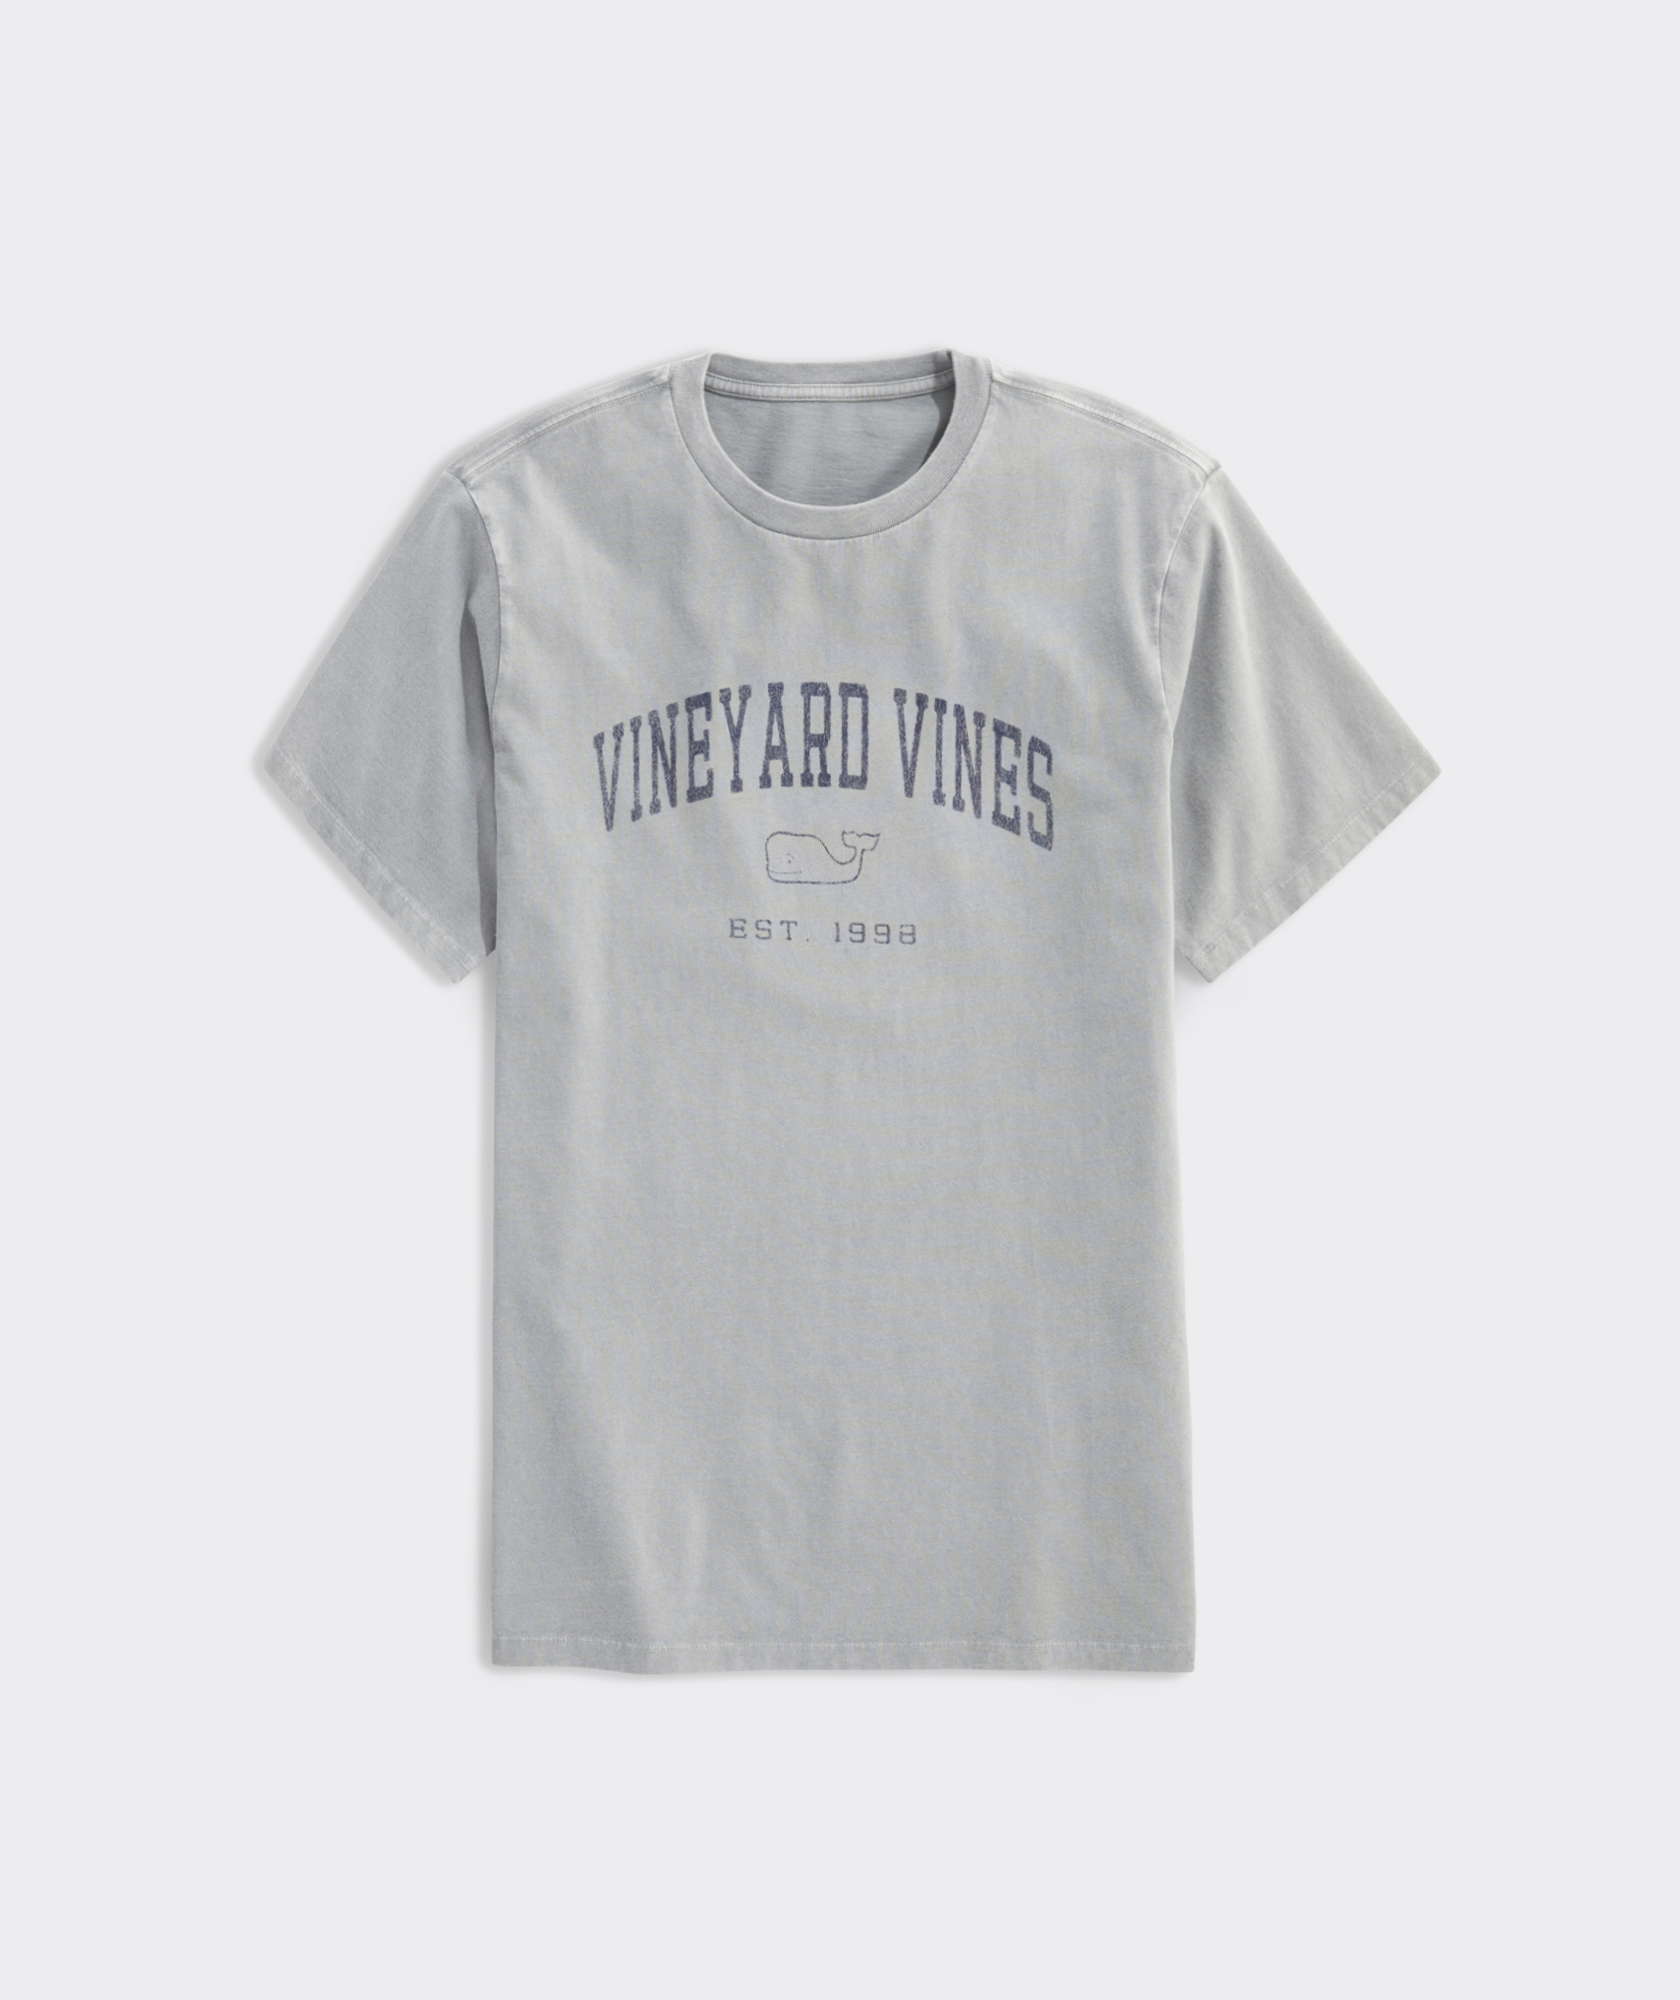 Vineyard Vines Men's Heritage Wash Cotton Graphic Tee - Gray - Size Small - Ultim